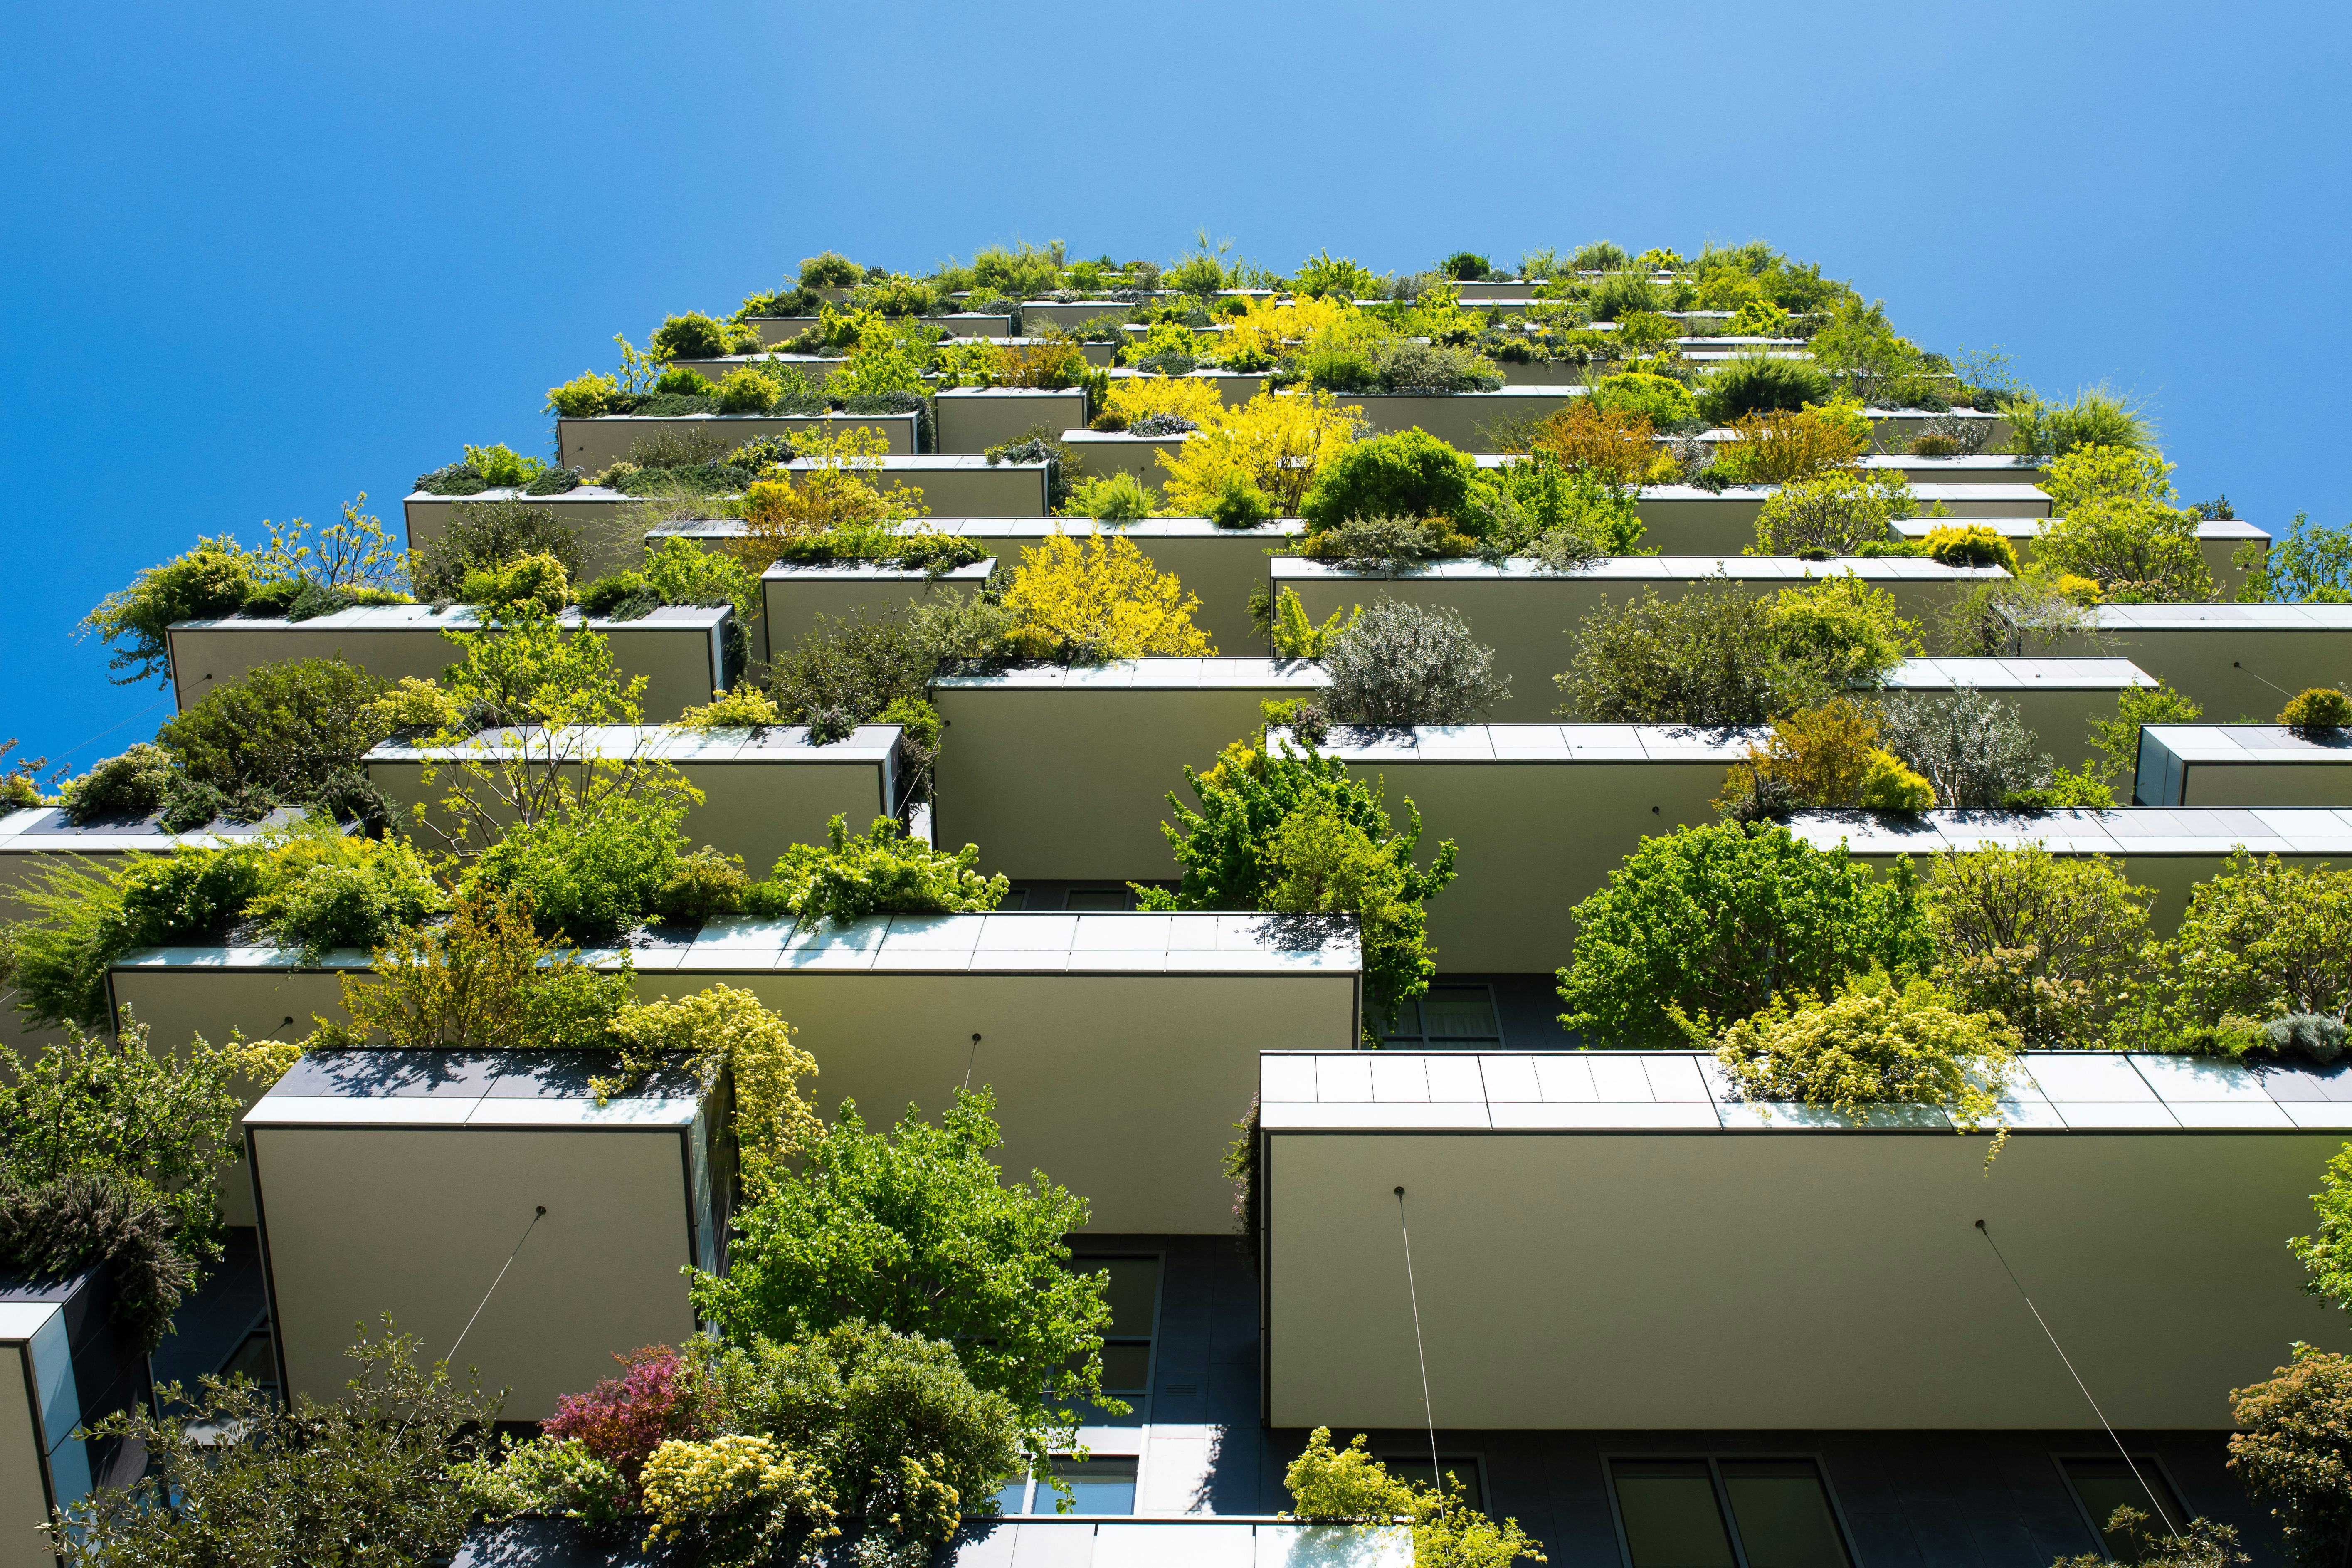 Rics definieert 'groene' hypotheek om klimaatdoelstelling te halen